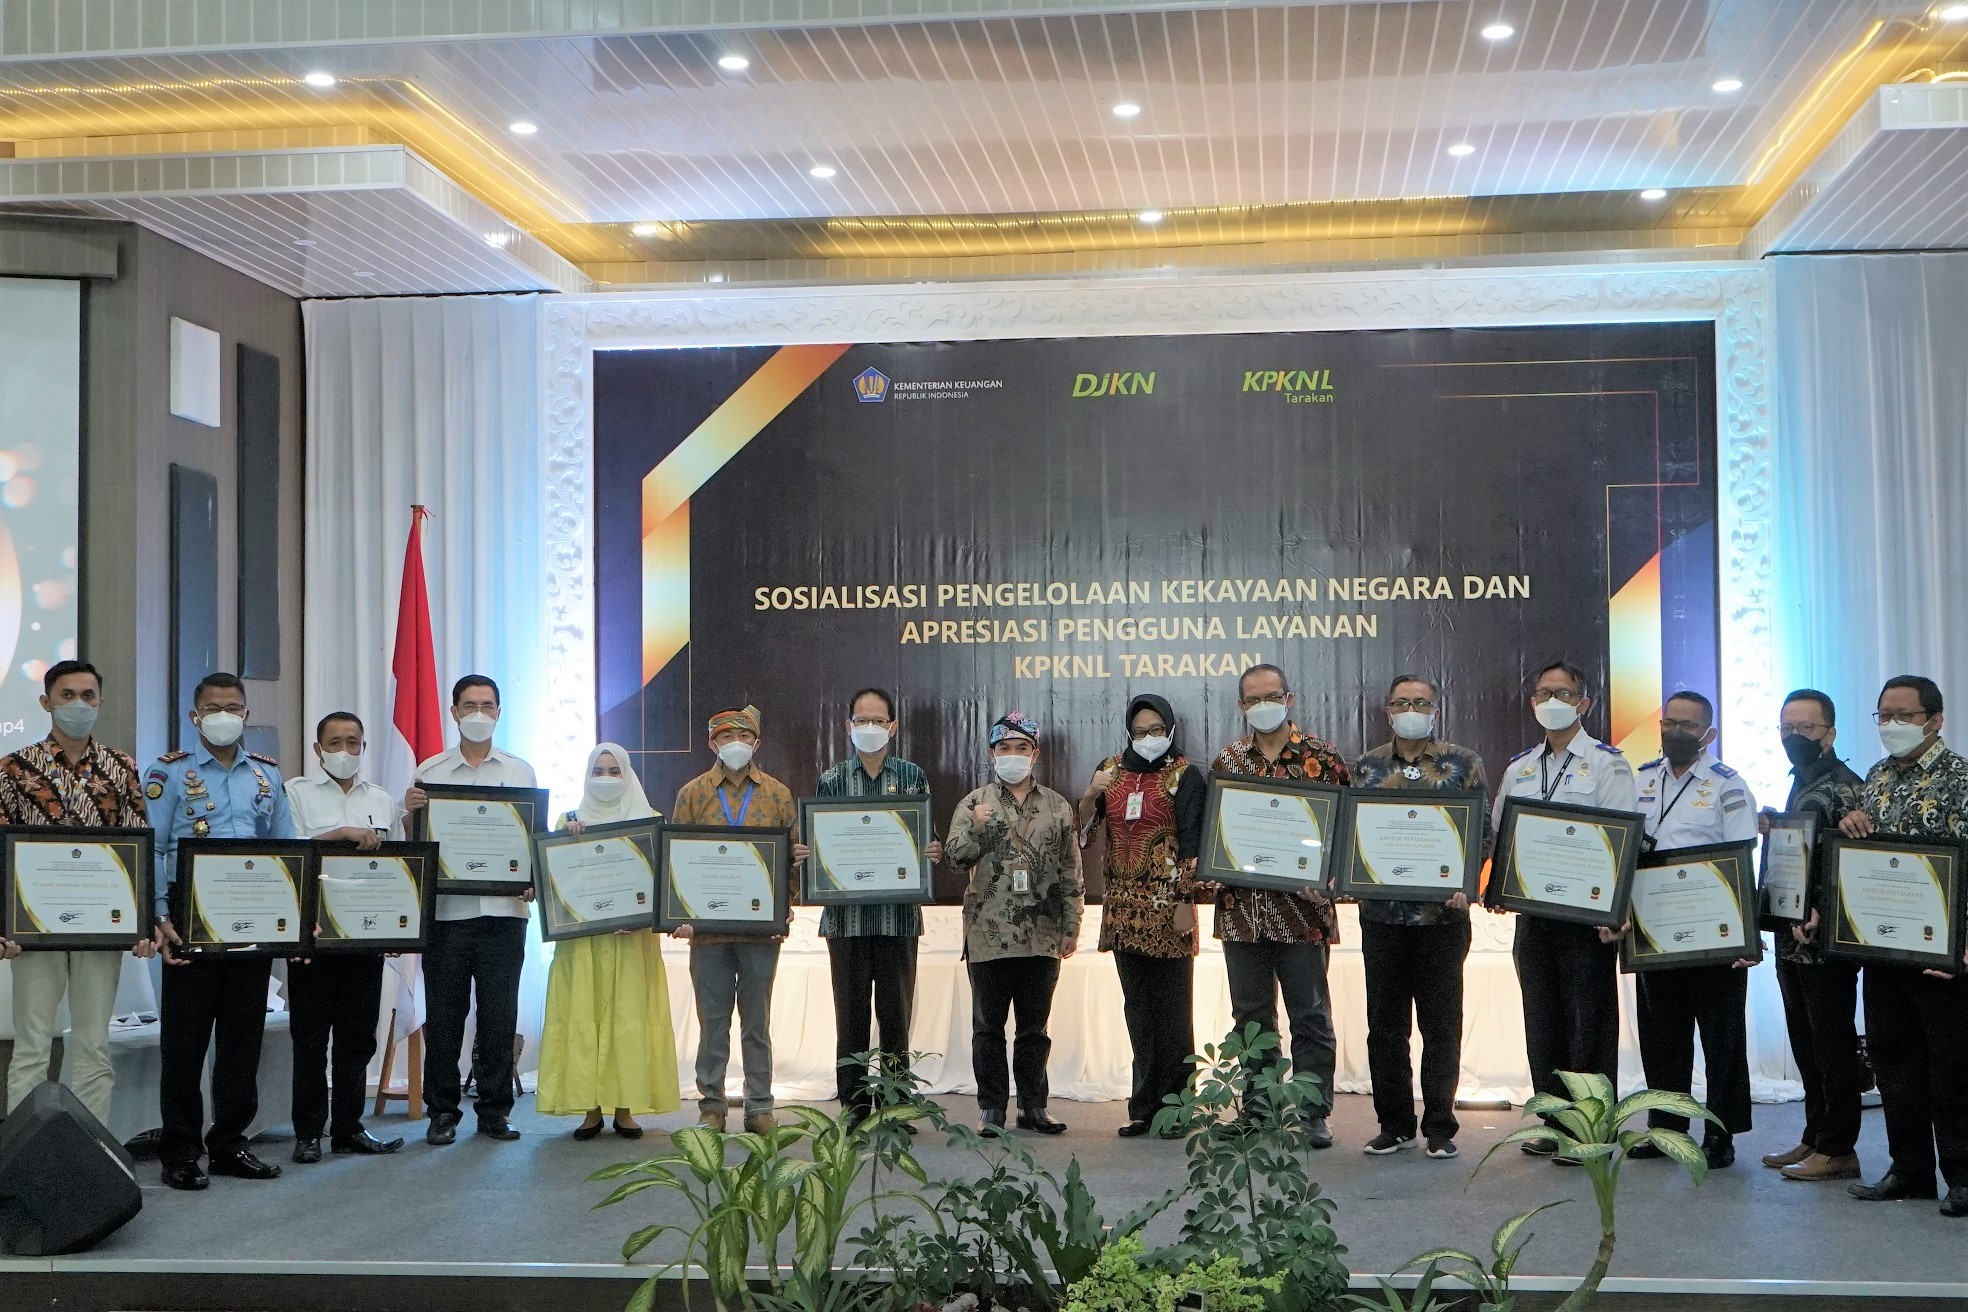 U’Tarakan Award 2021, Kepala KPKNL Tarakan: Kerja Sama dengan Stakeholder adalah Kunci Optimalisasi Aset Negara